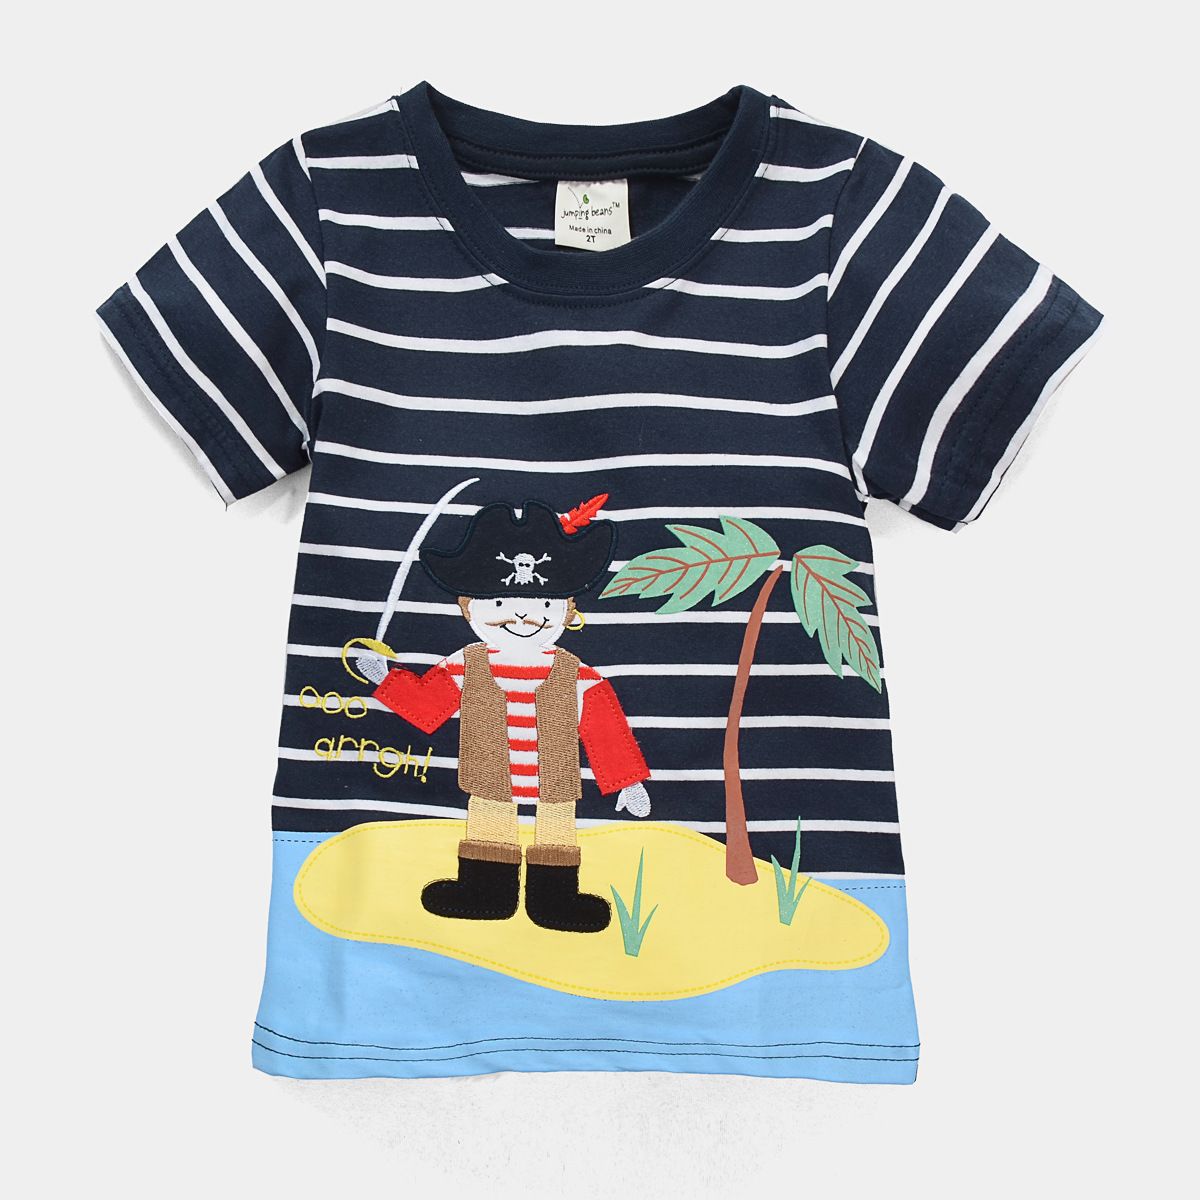 pirate t shirt boy